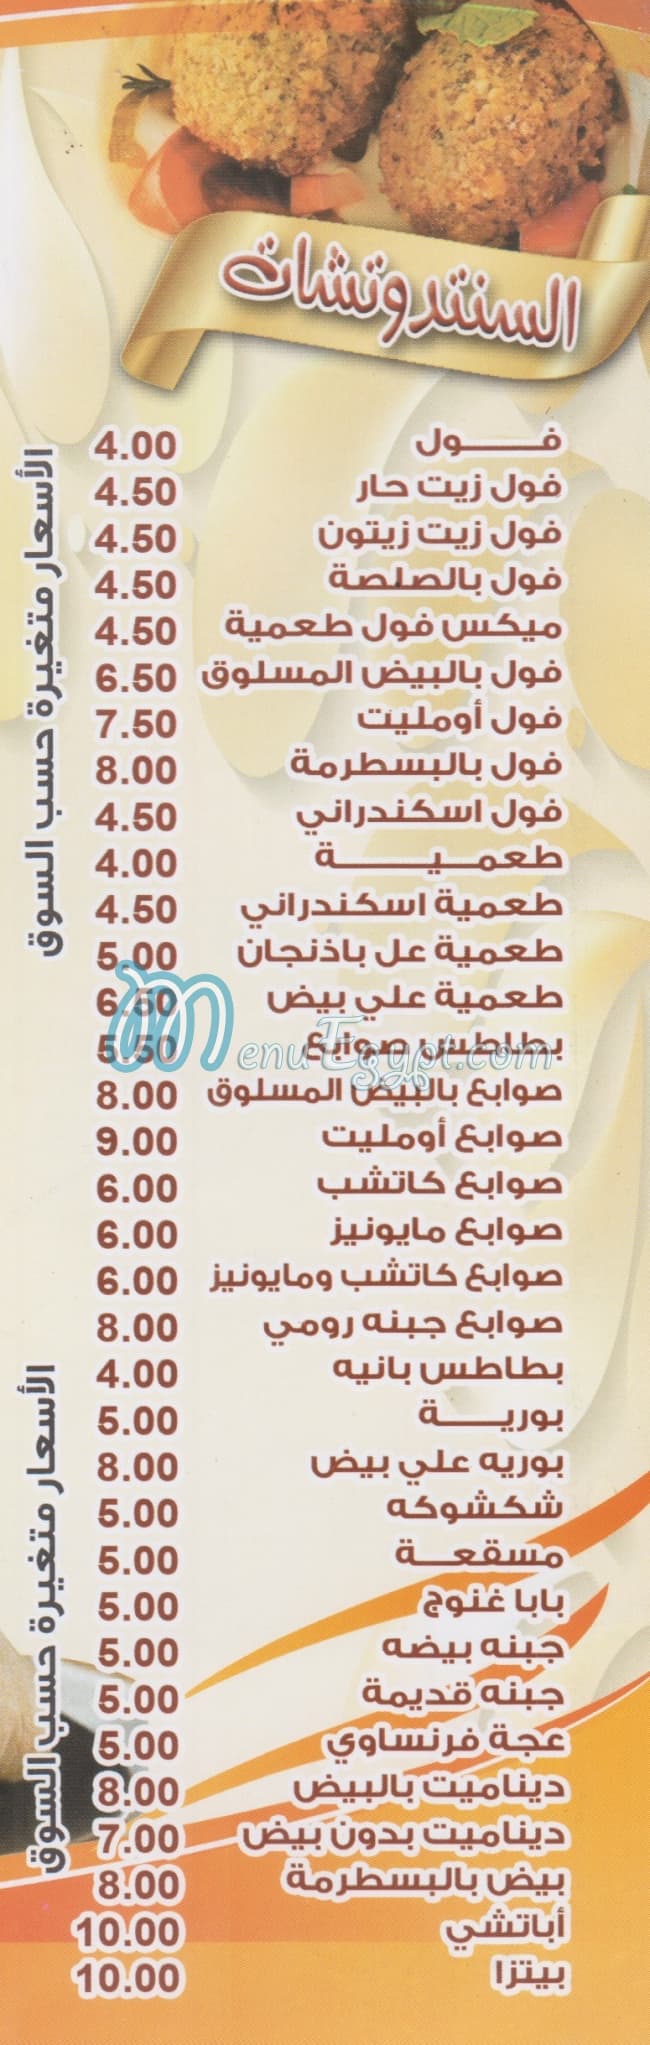 El Anwar El Mohamedeya menu